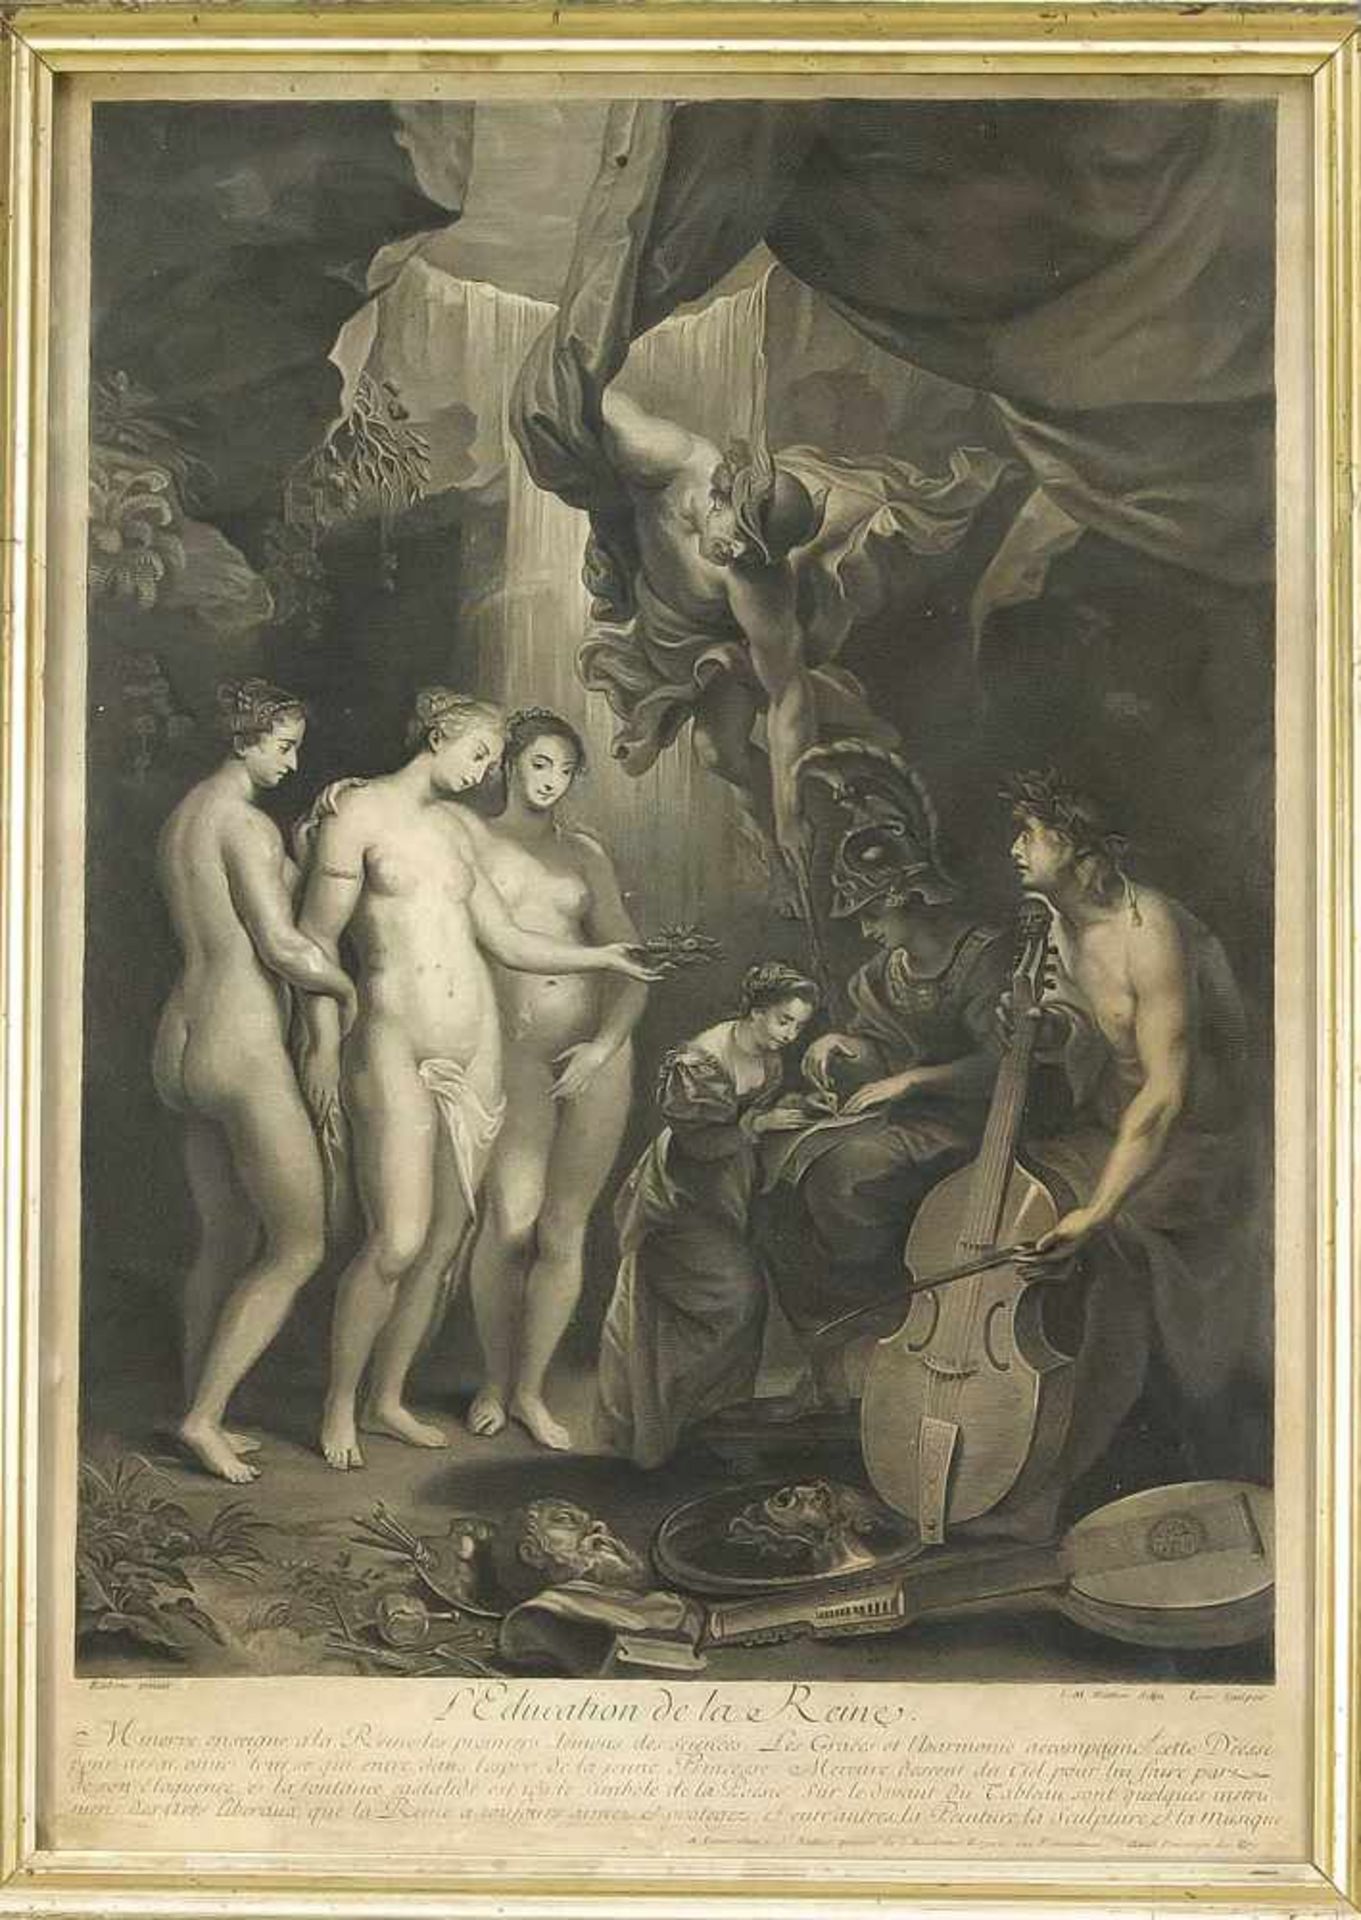 Maria de' Medici - Jean-Marc Nattier (1685-1766) nach Peter Paul Rubens, drei Kupfersticheaus der